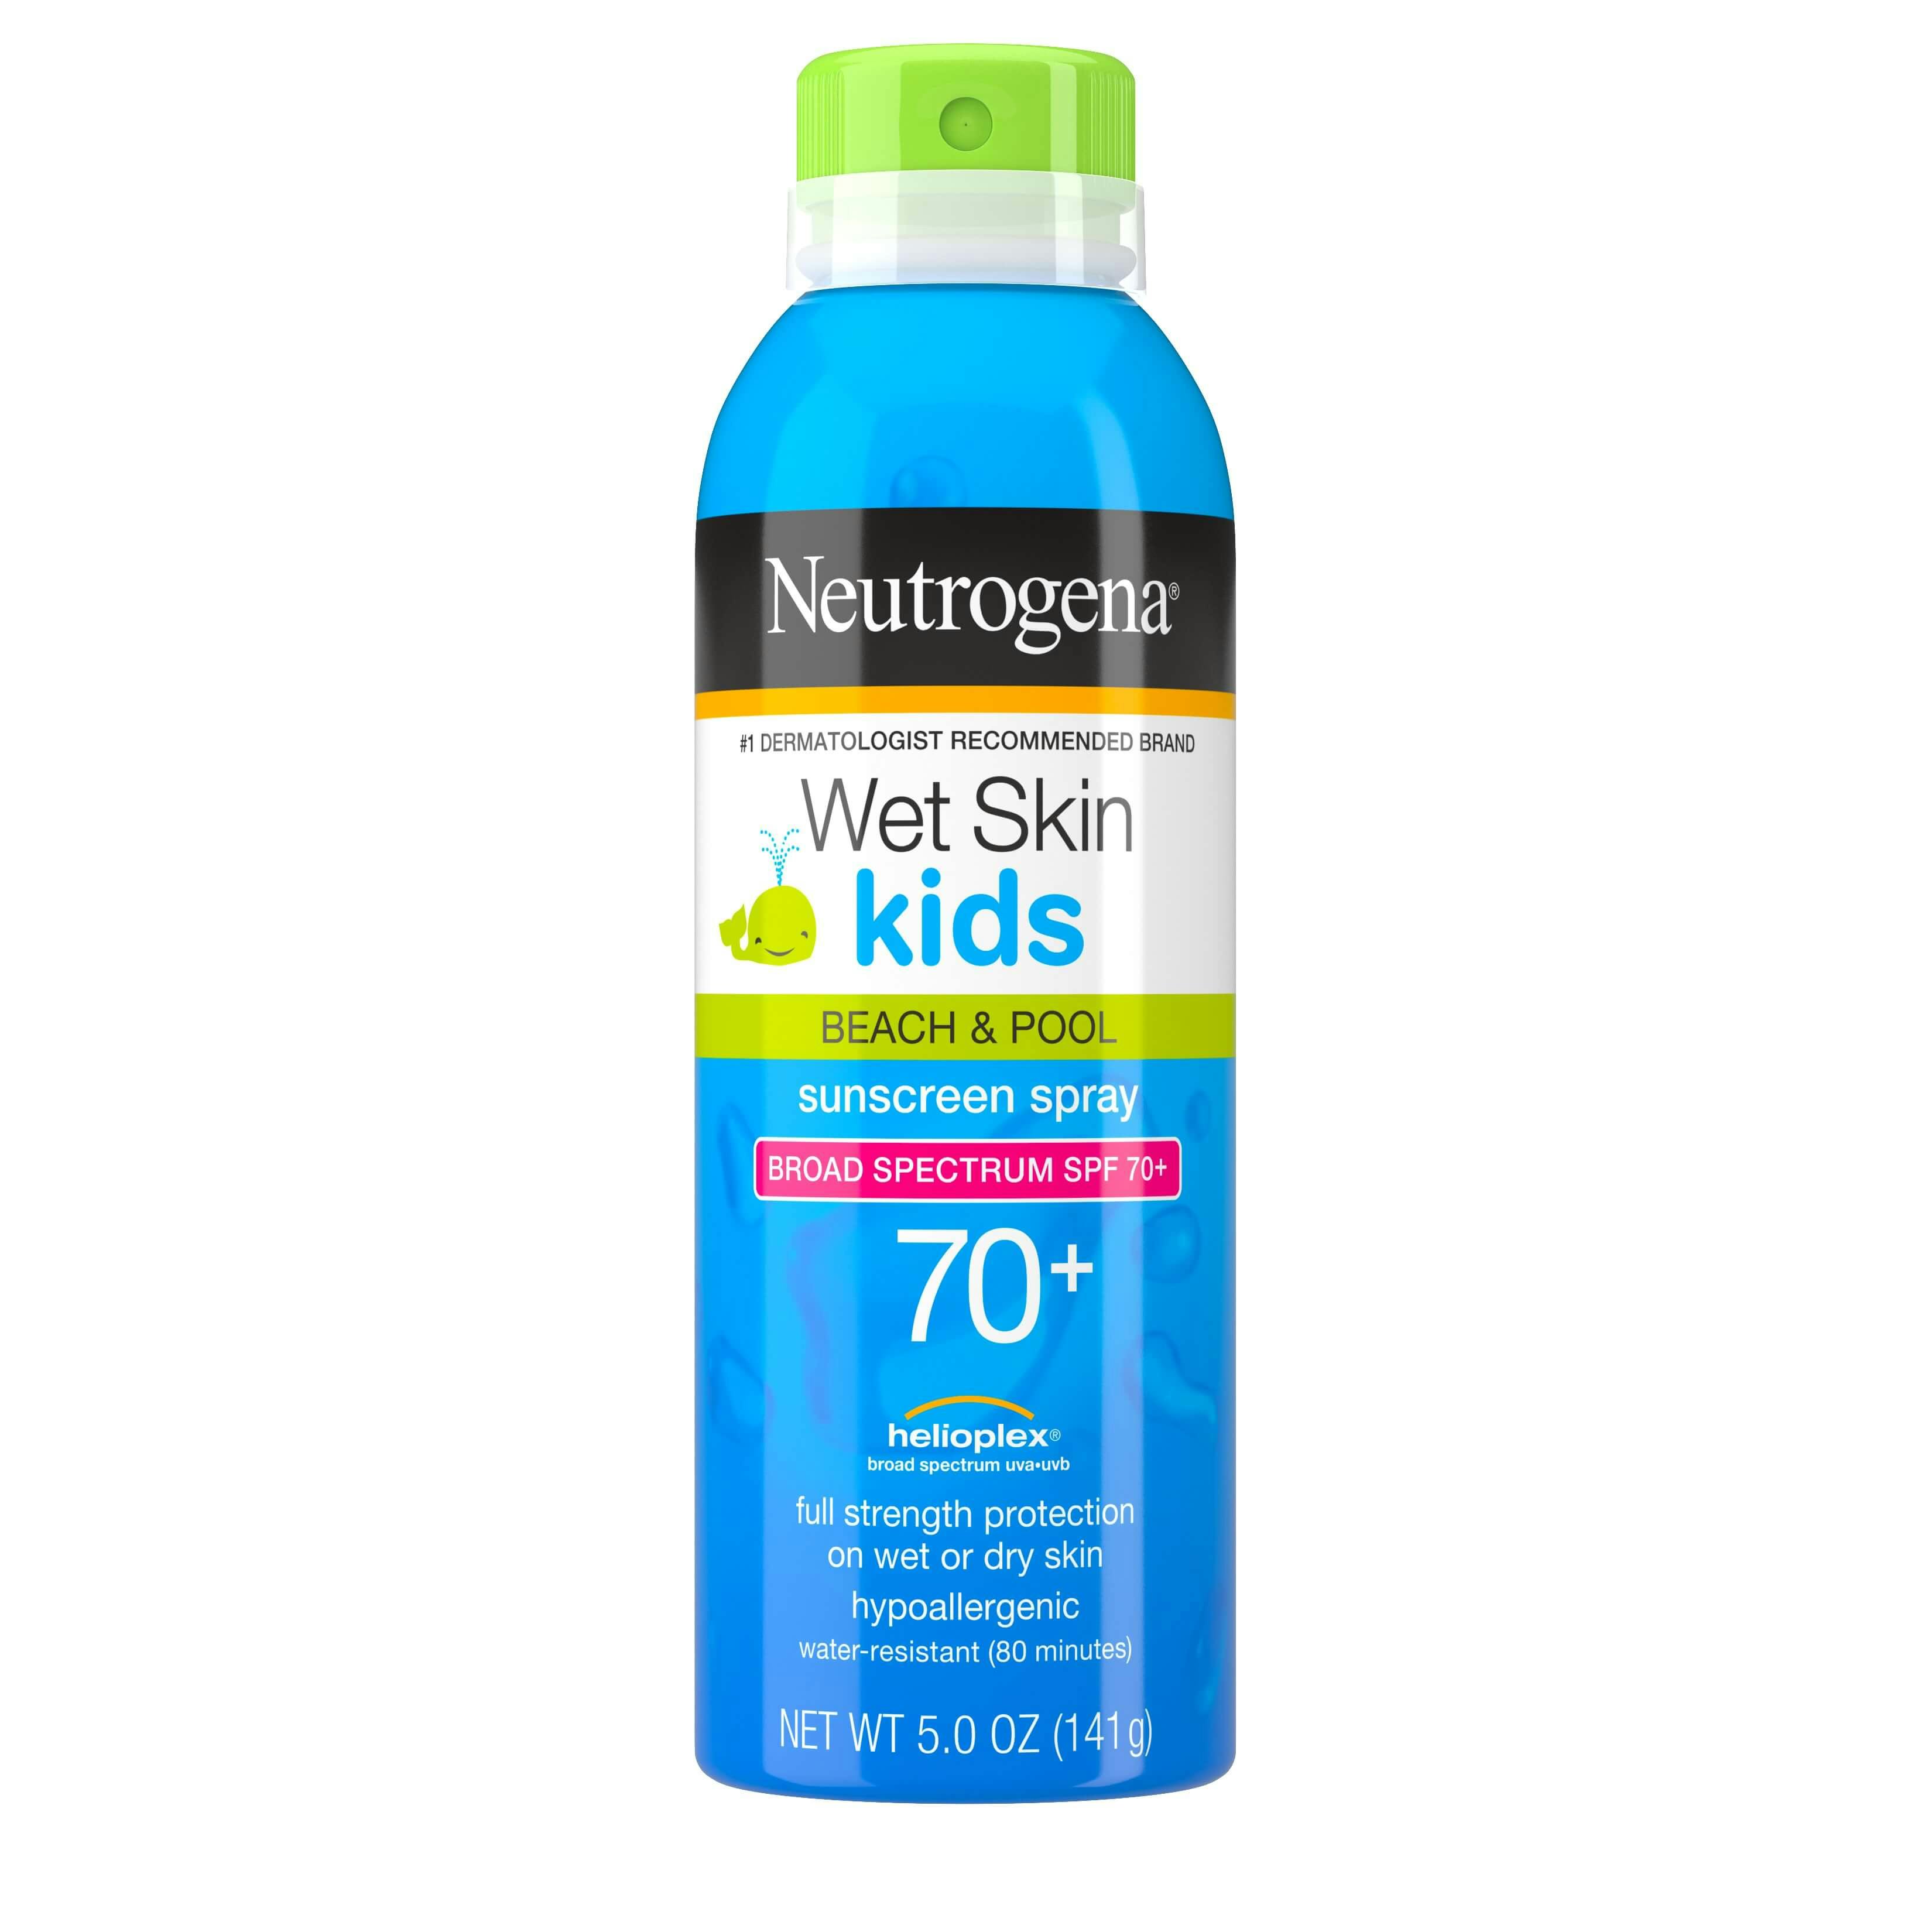 neutrogena reef safe sunscreen